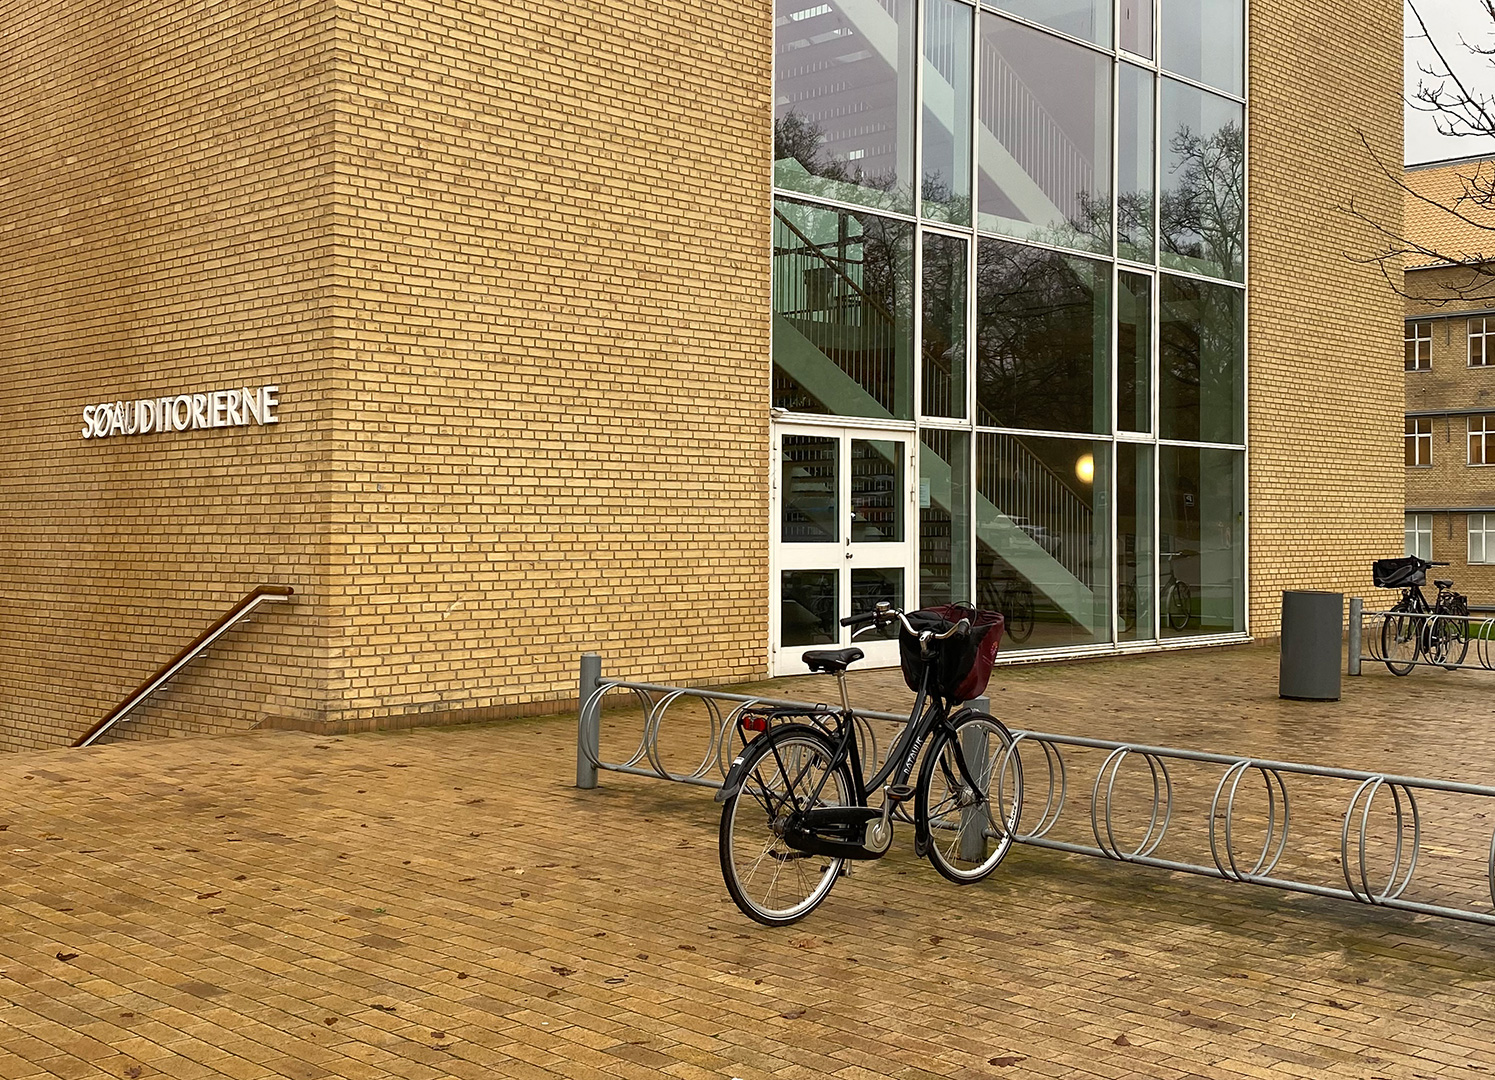 Double-sided bicycle rack at Aarhus University